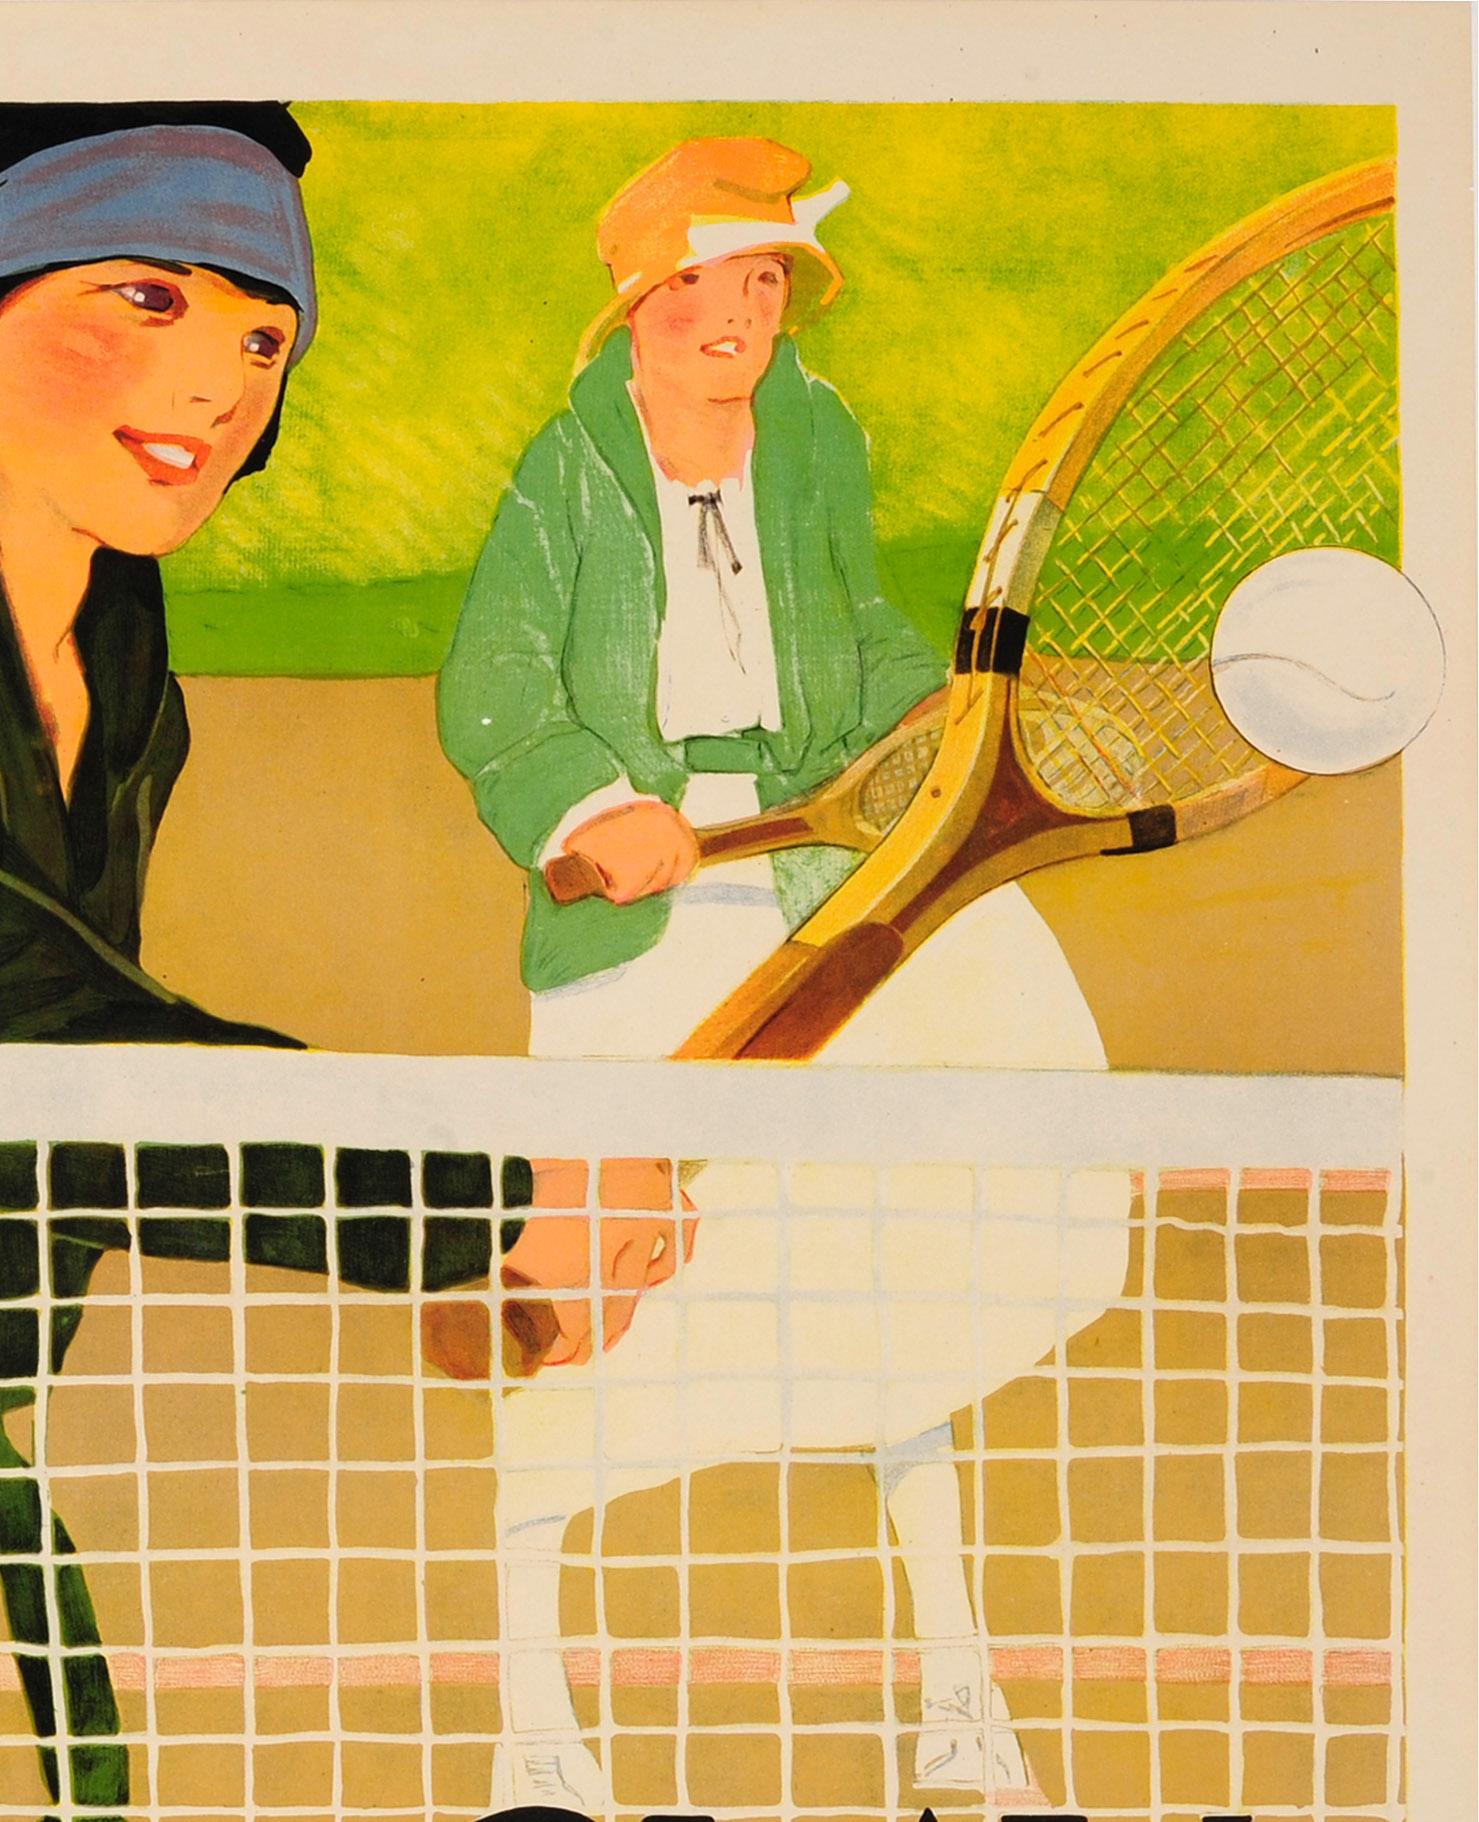 vintage tennis poster